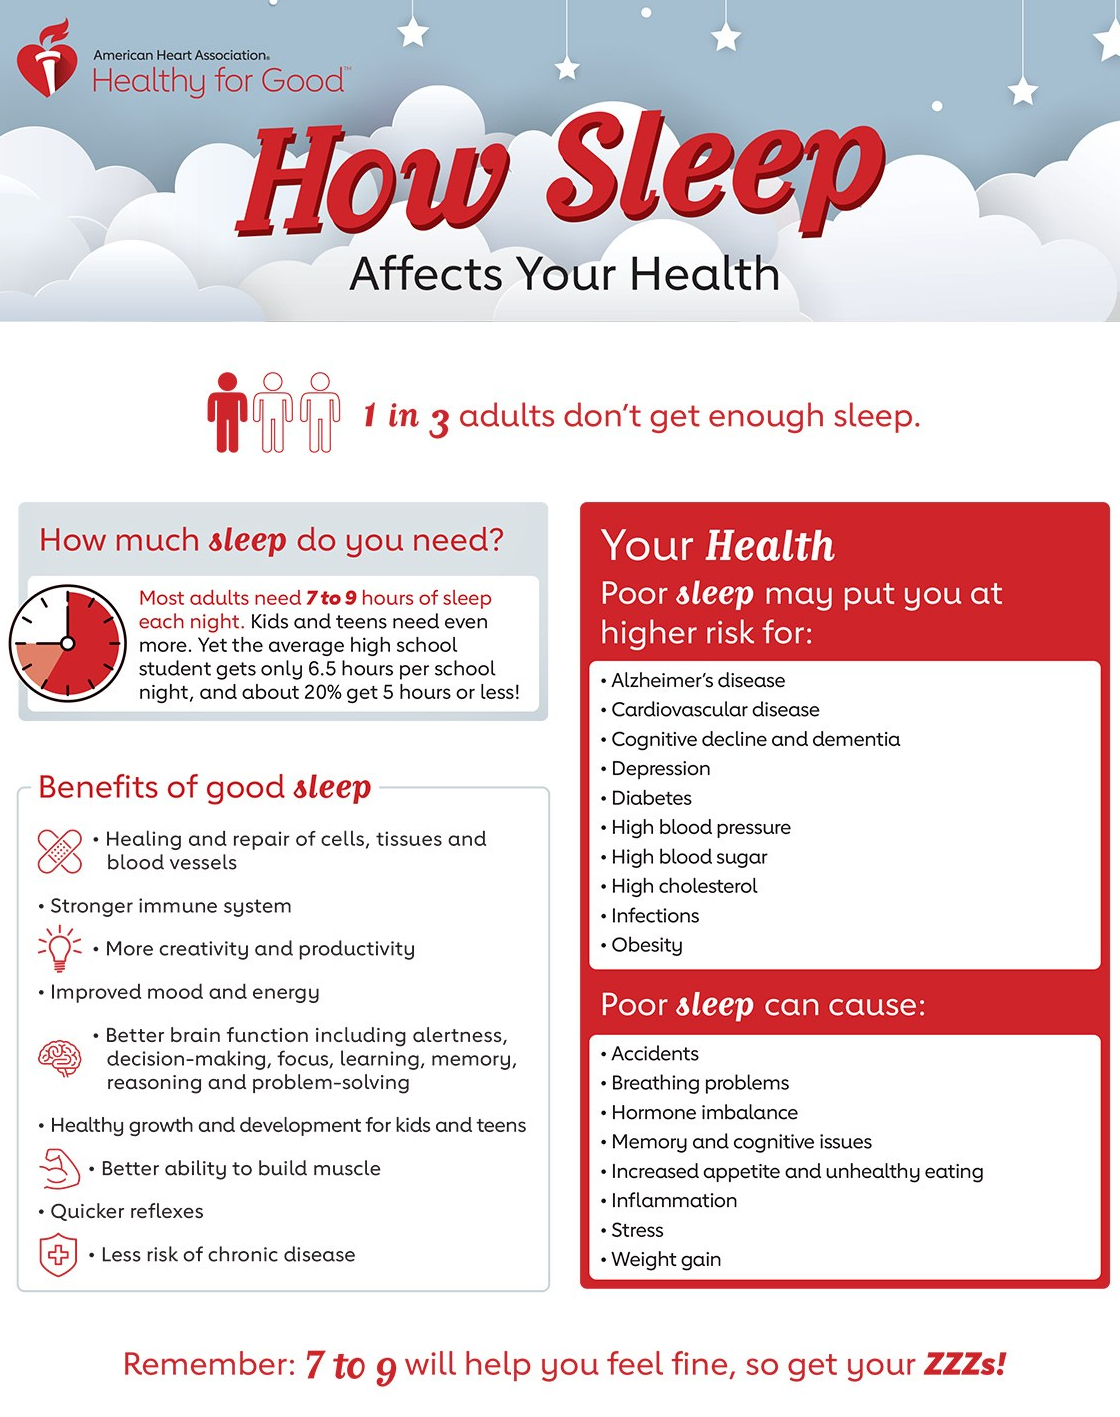 How_Sleep_Affects_Health_Infographic - American Heart Association